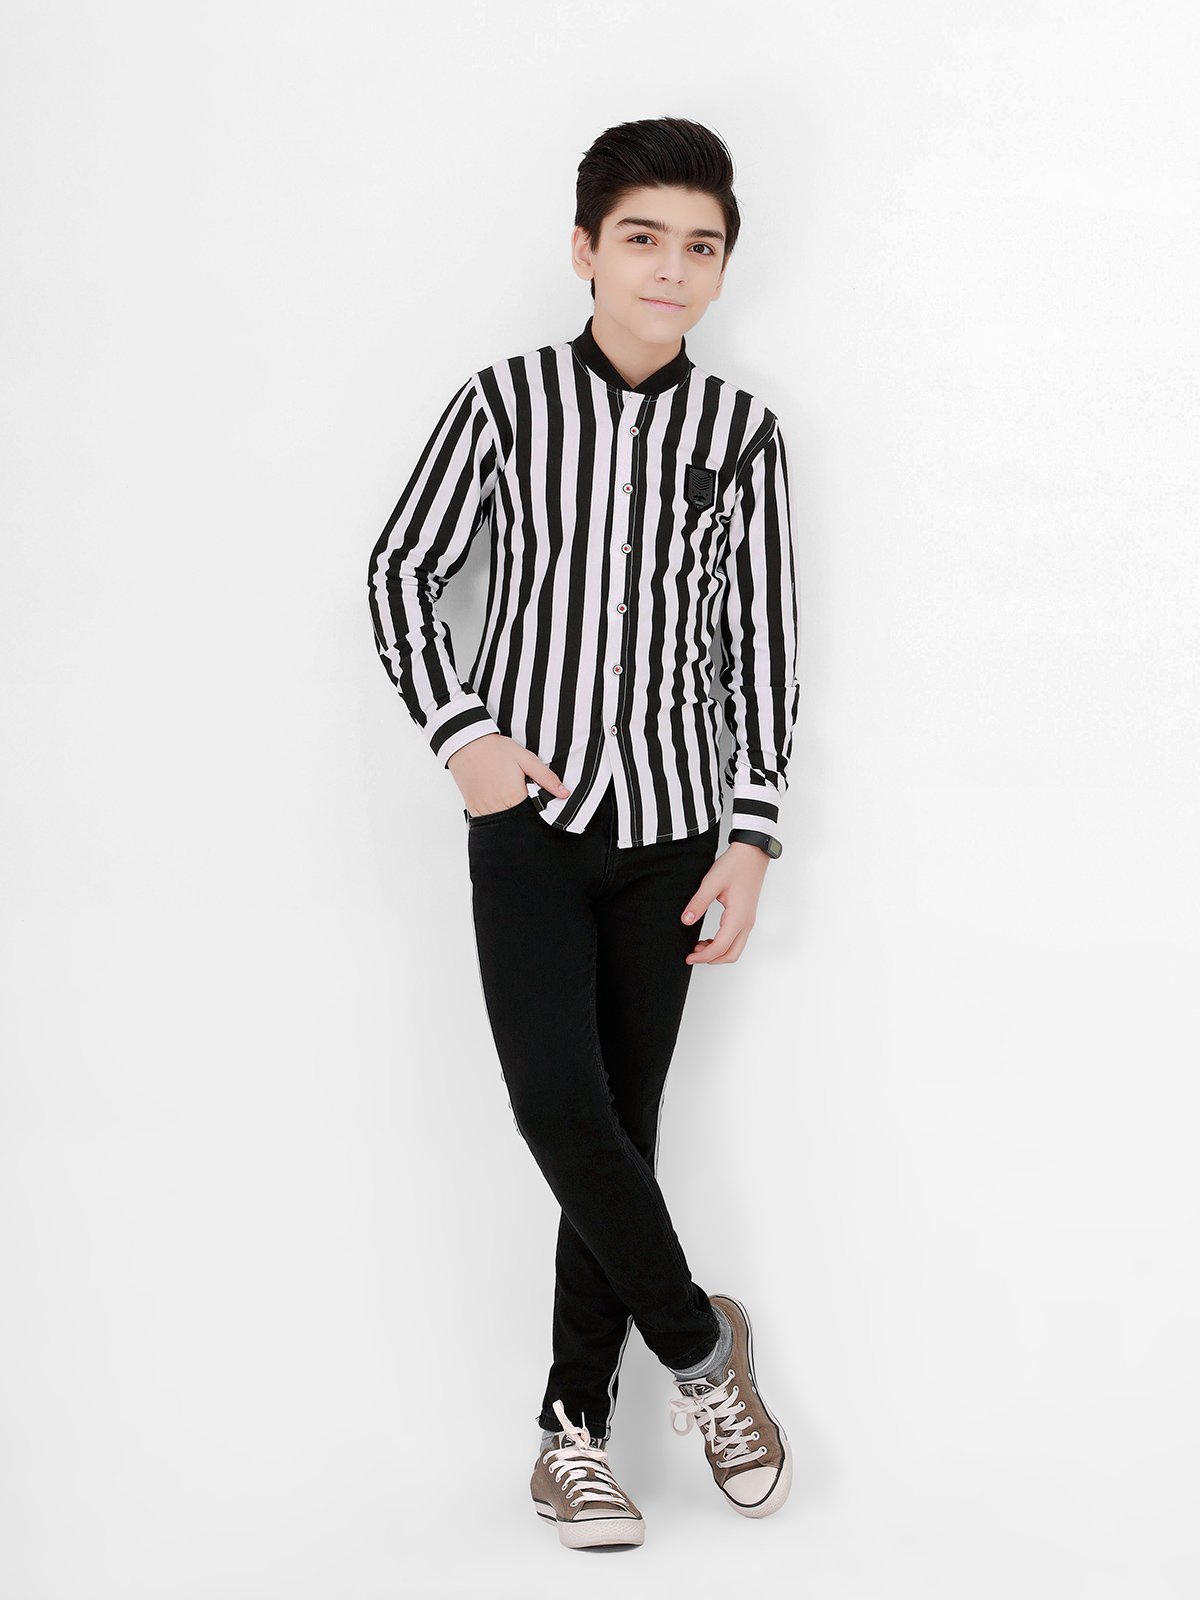 Boy's Black & White Shirt - EBTS21-27305